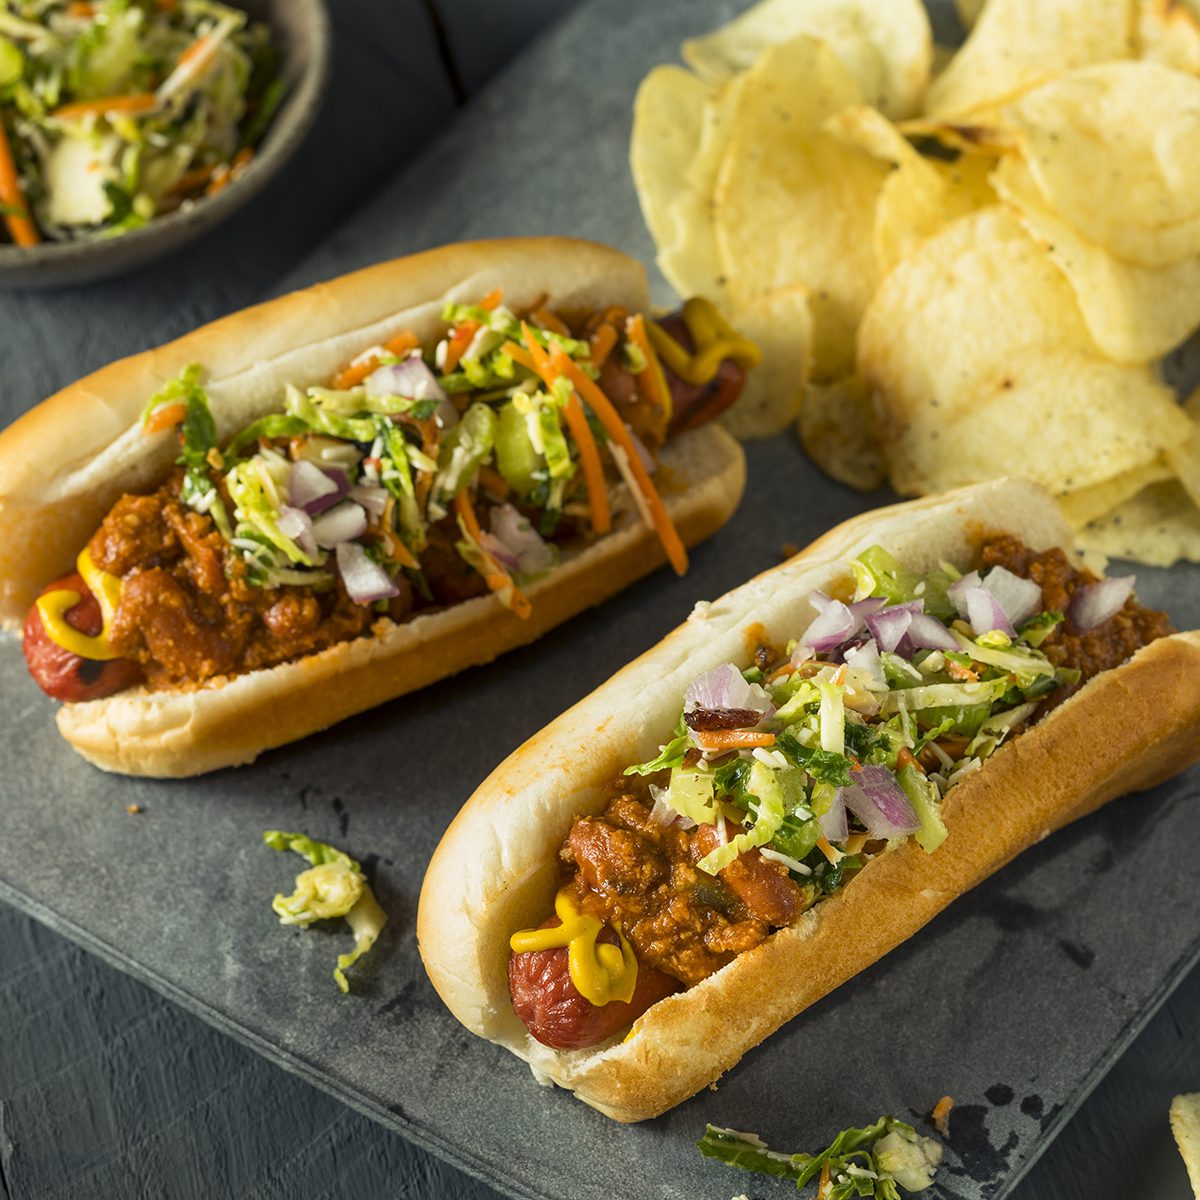 10 of America's Best Regional Hot Dog Recipes